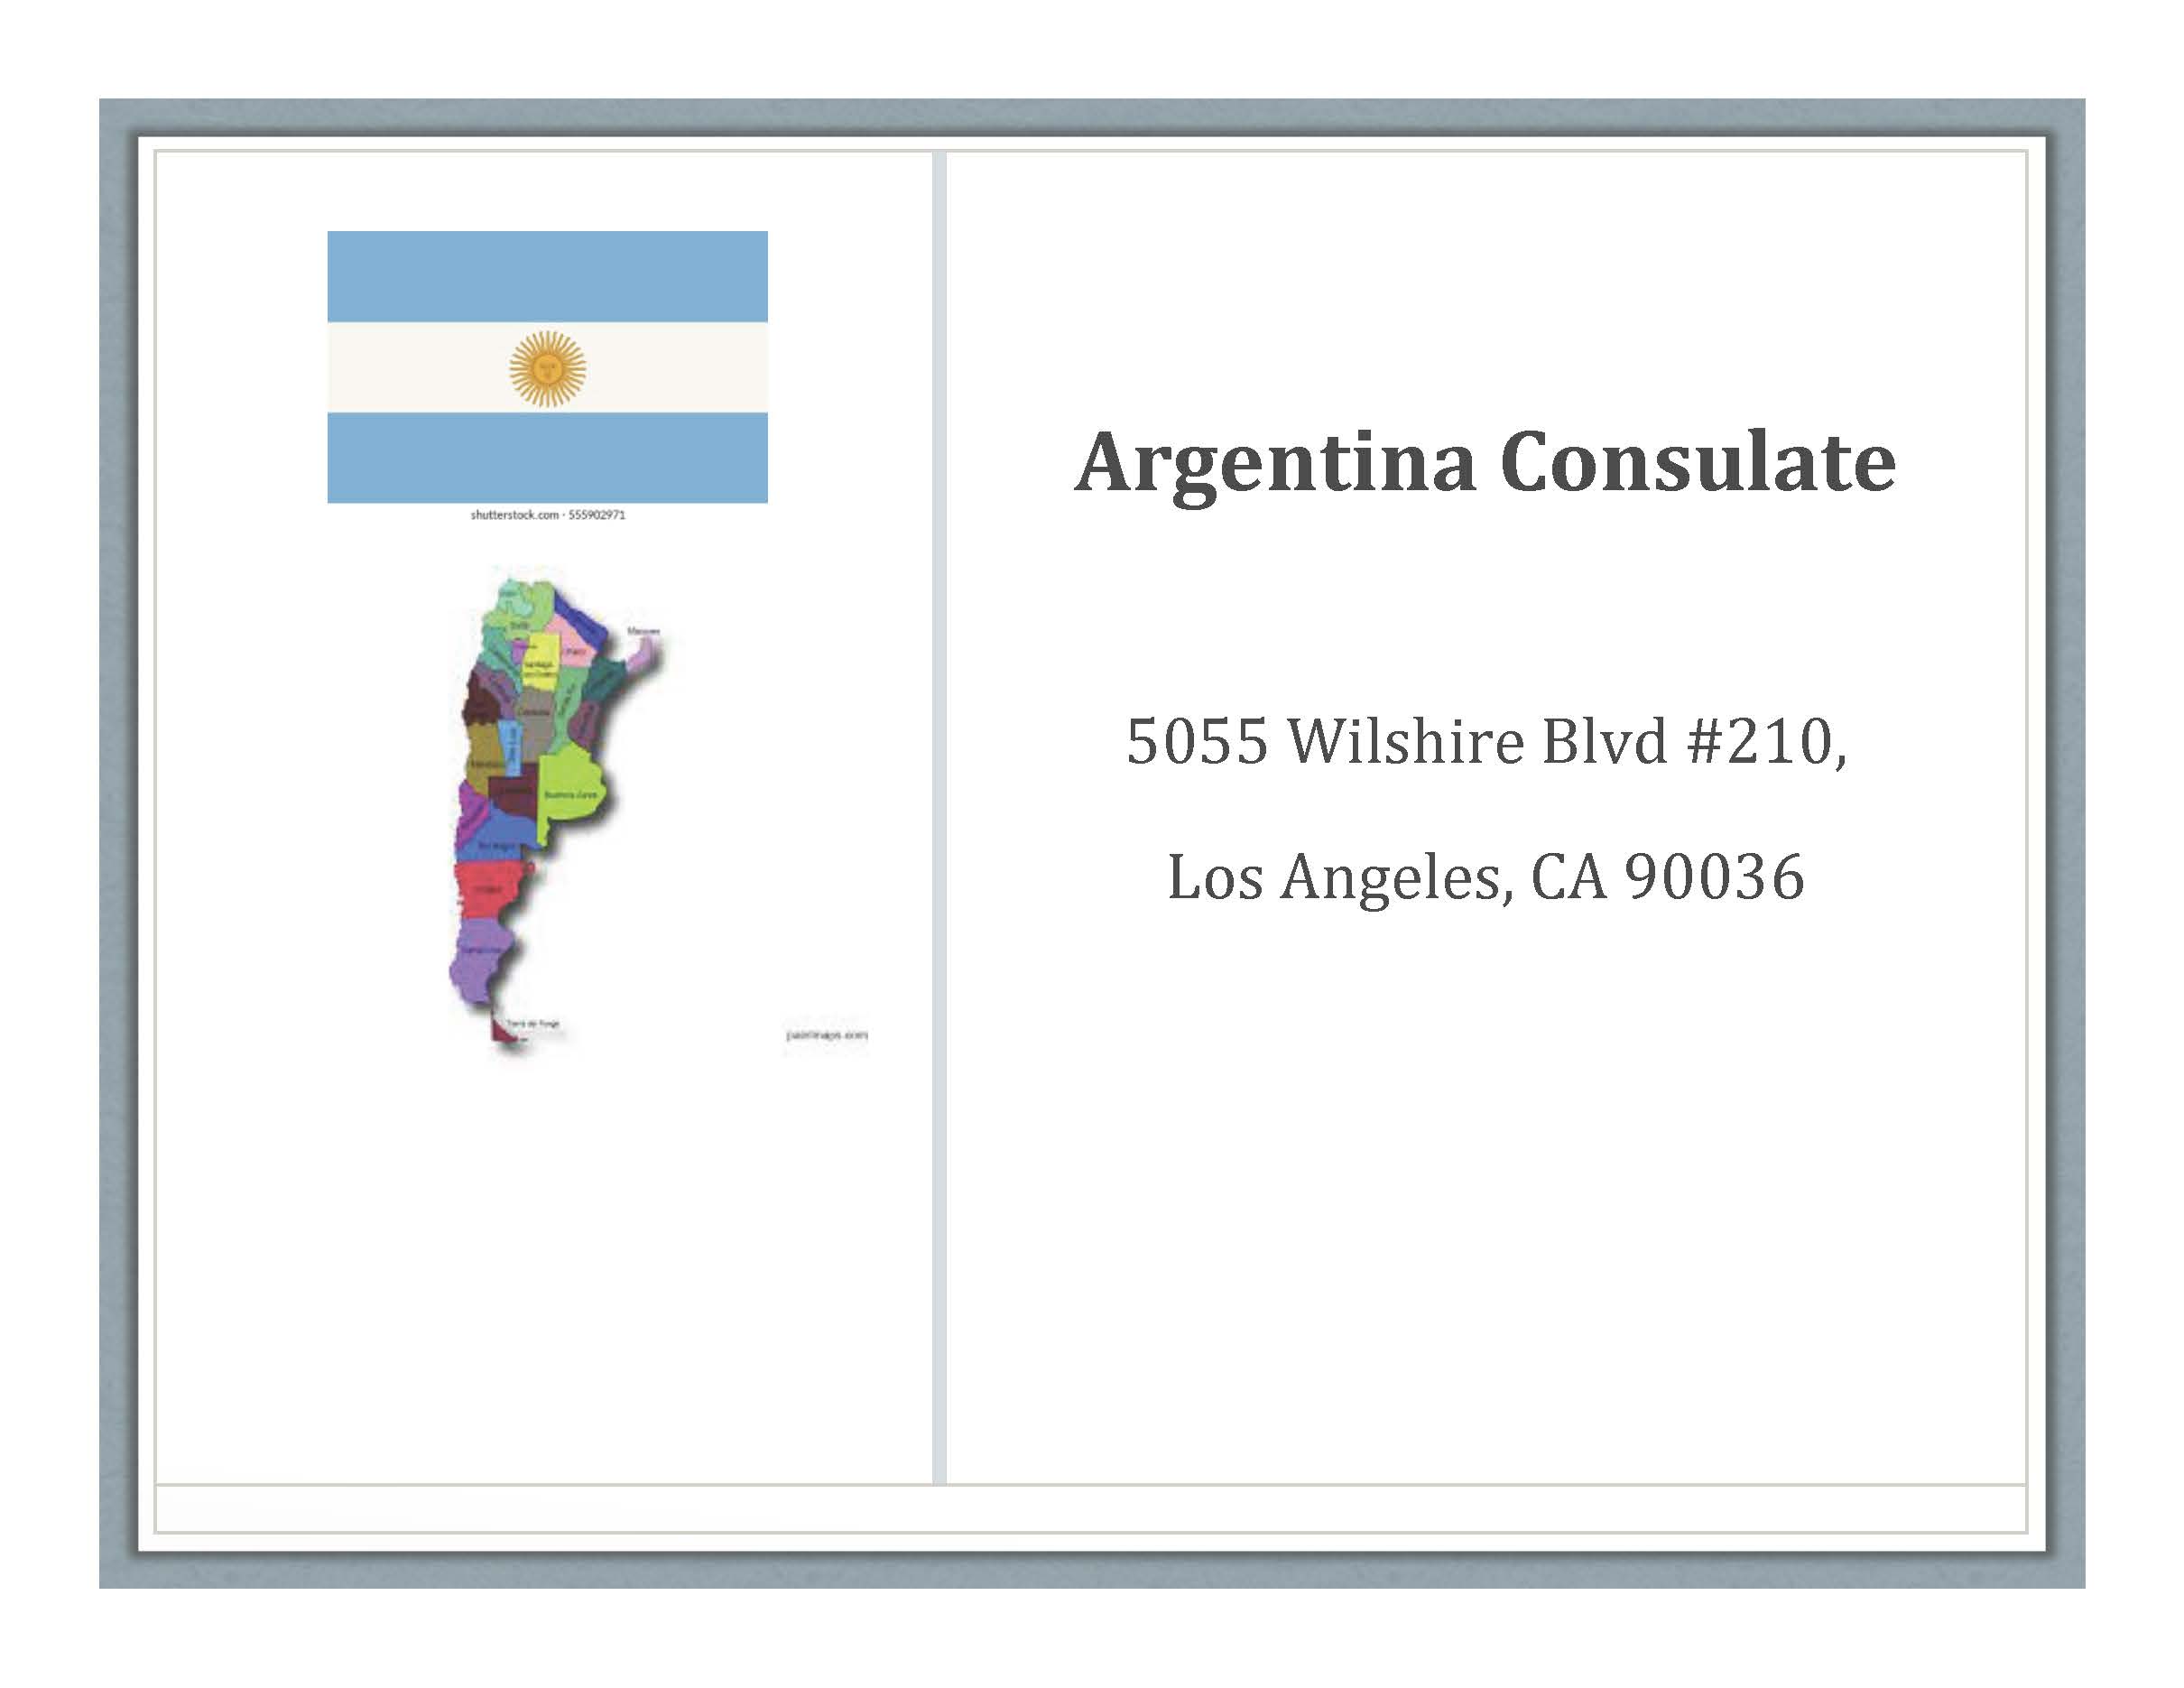 Argentina Consulate: 5055 Wilshire Blvd #210, Los Angeles, CA 90036